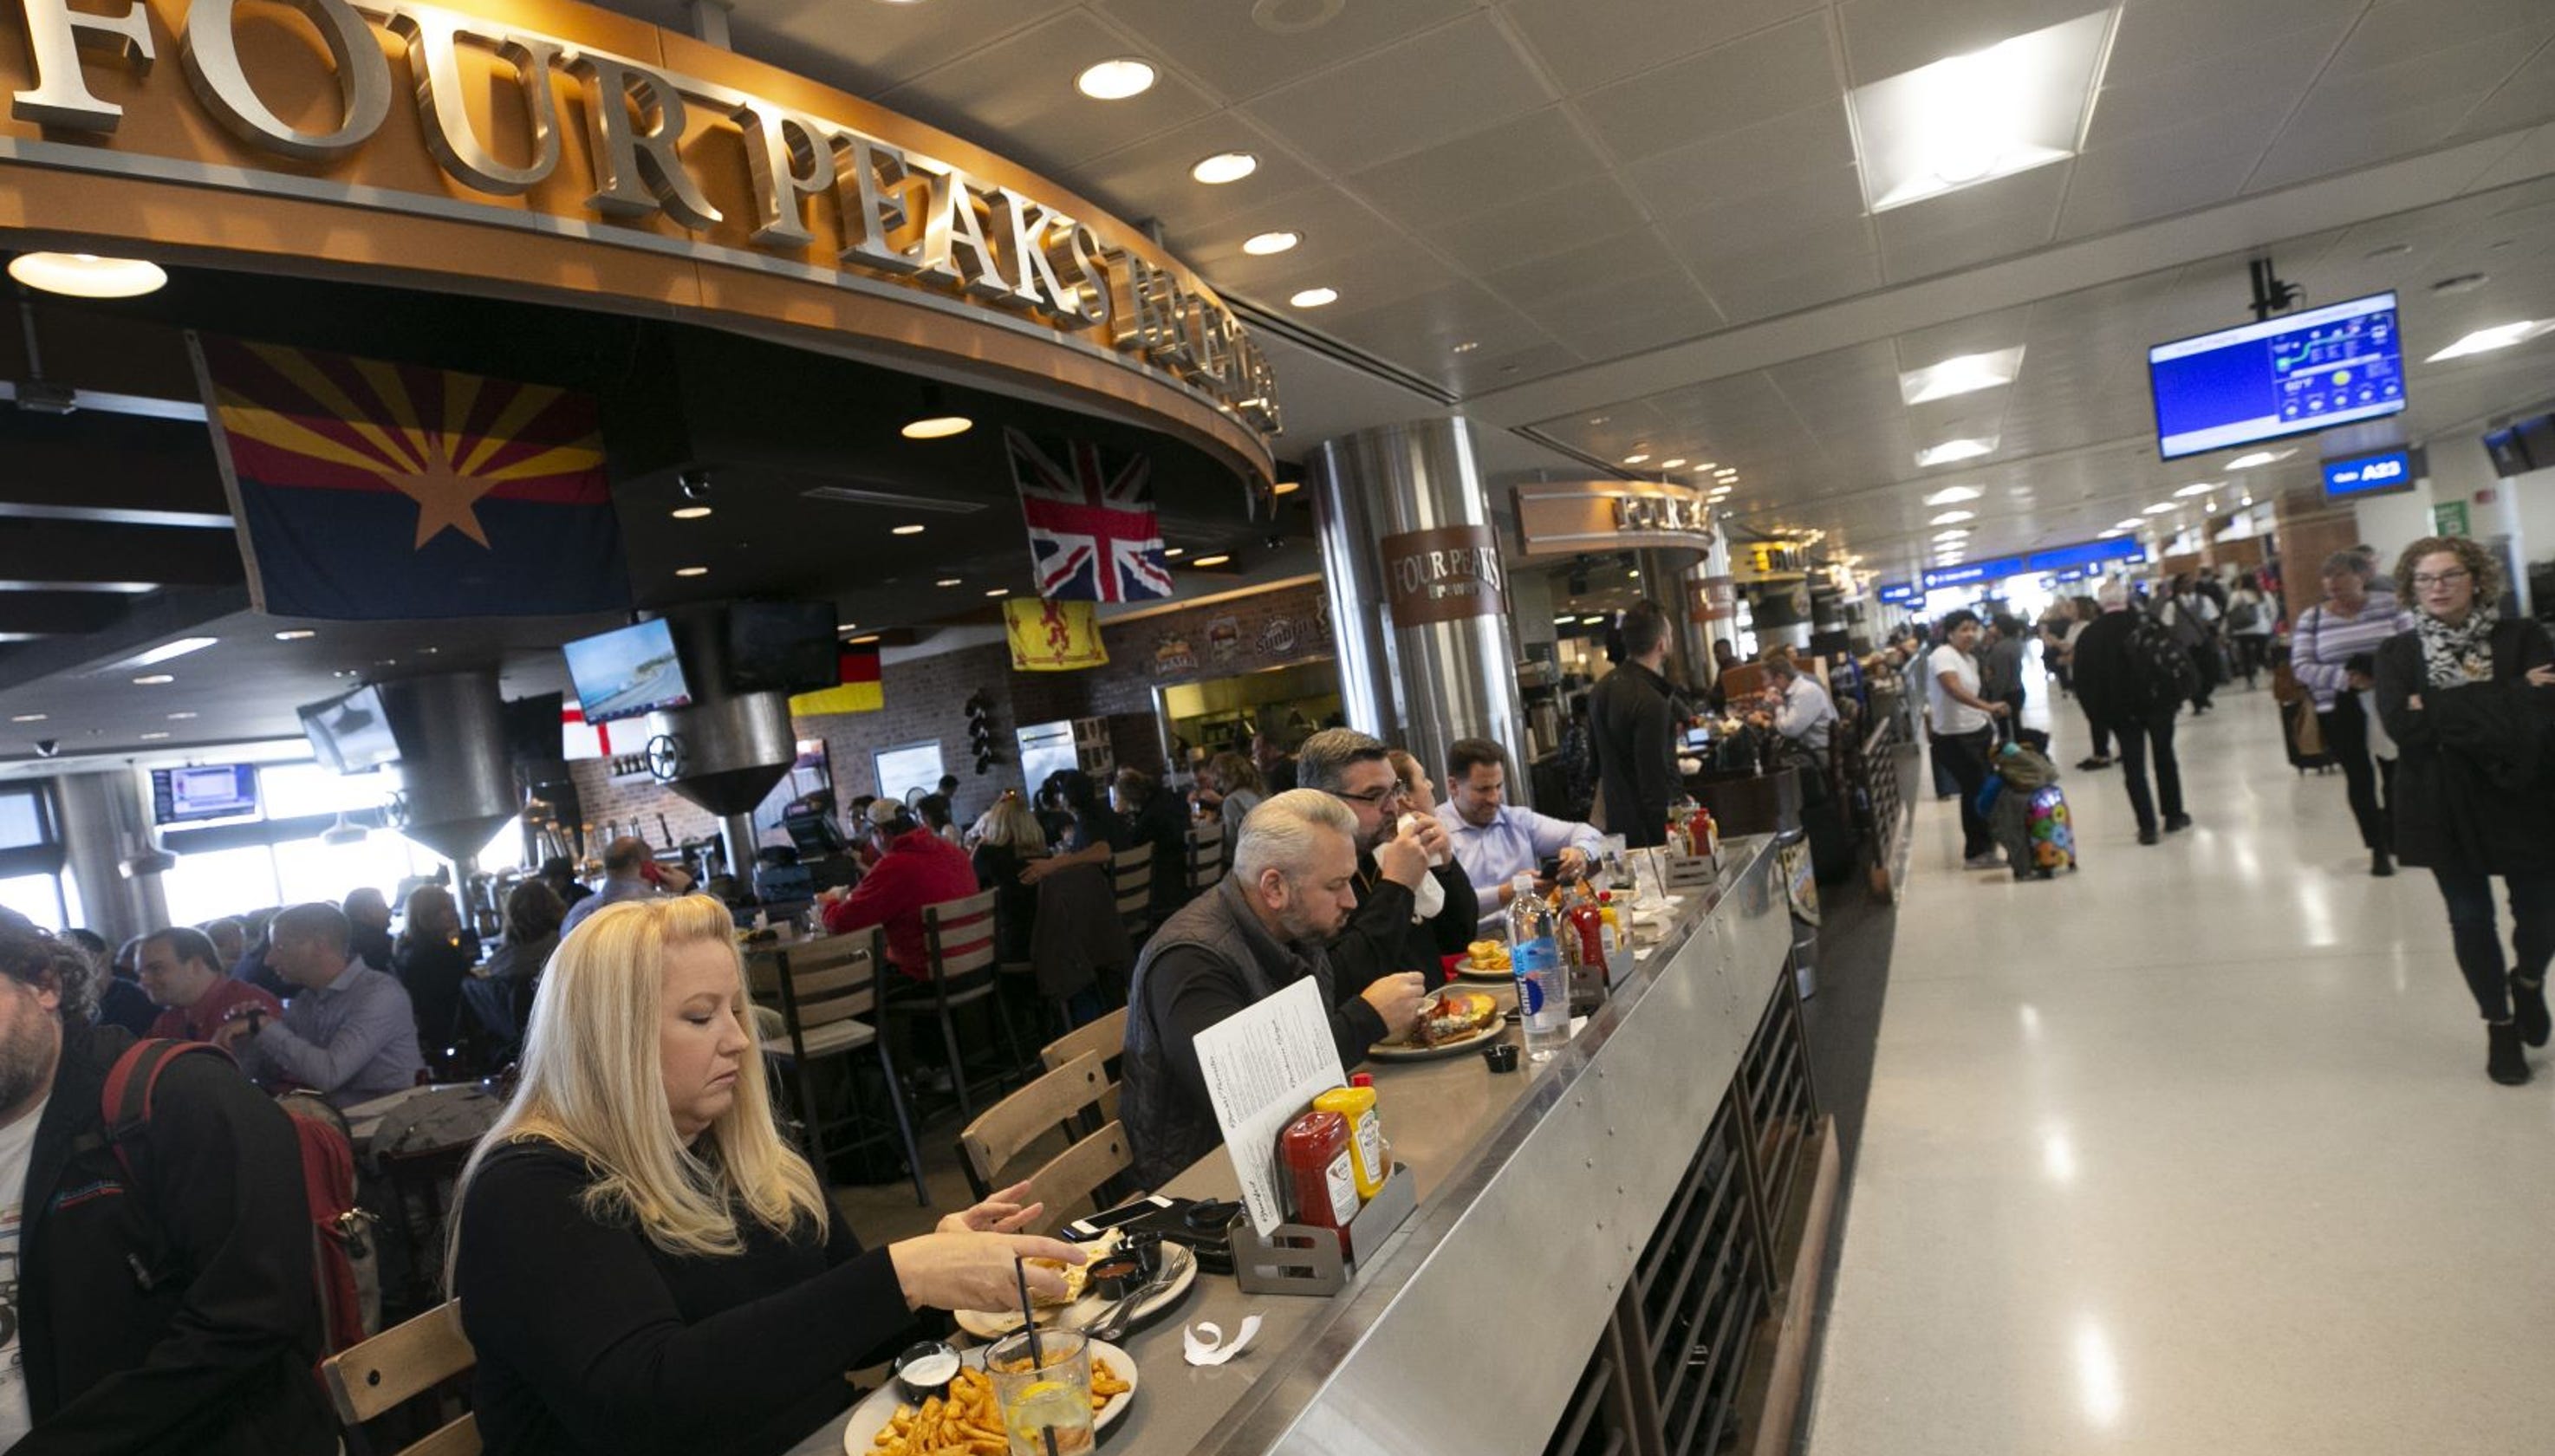 Phoenix Sky Harbor Airport restaurants ask to raise prices